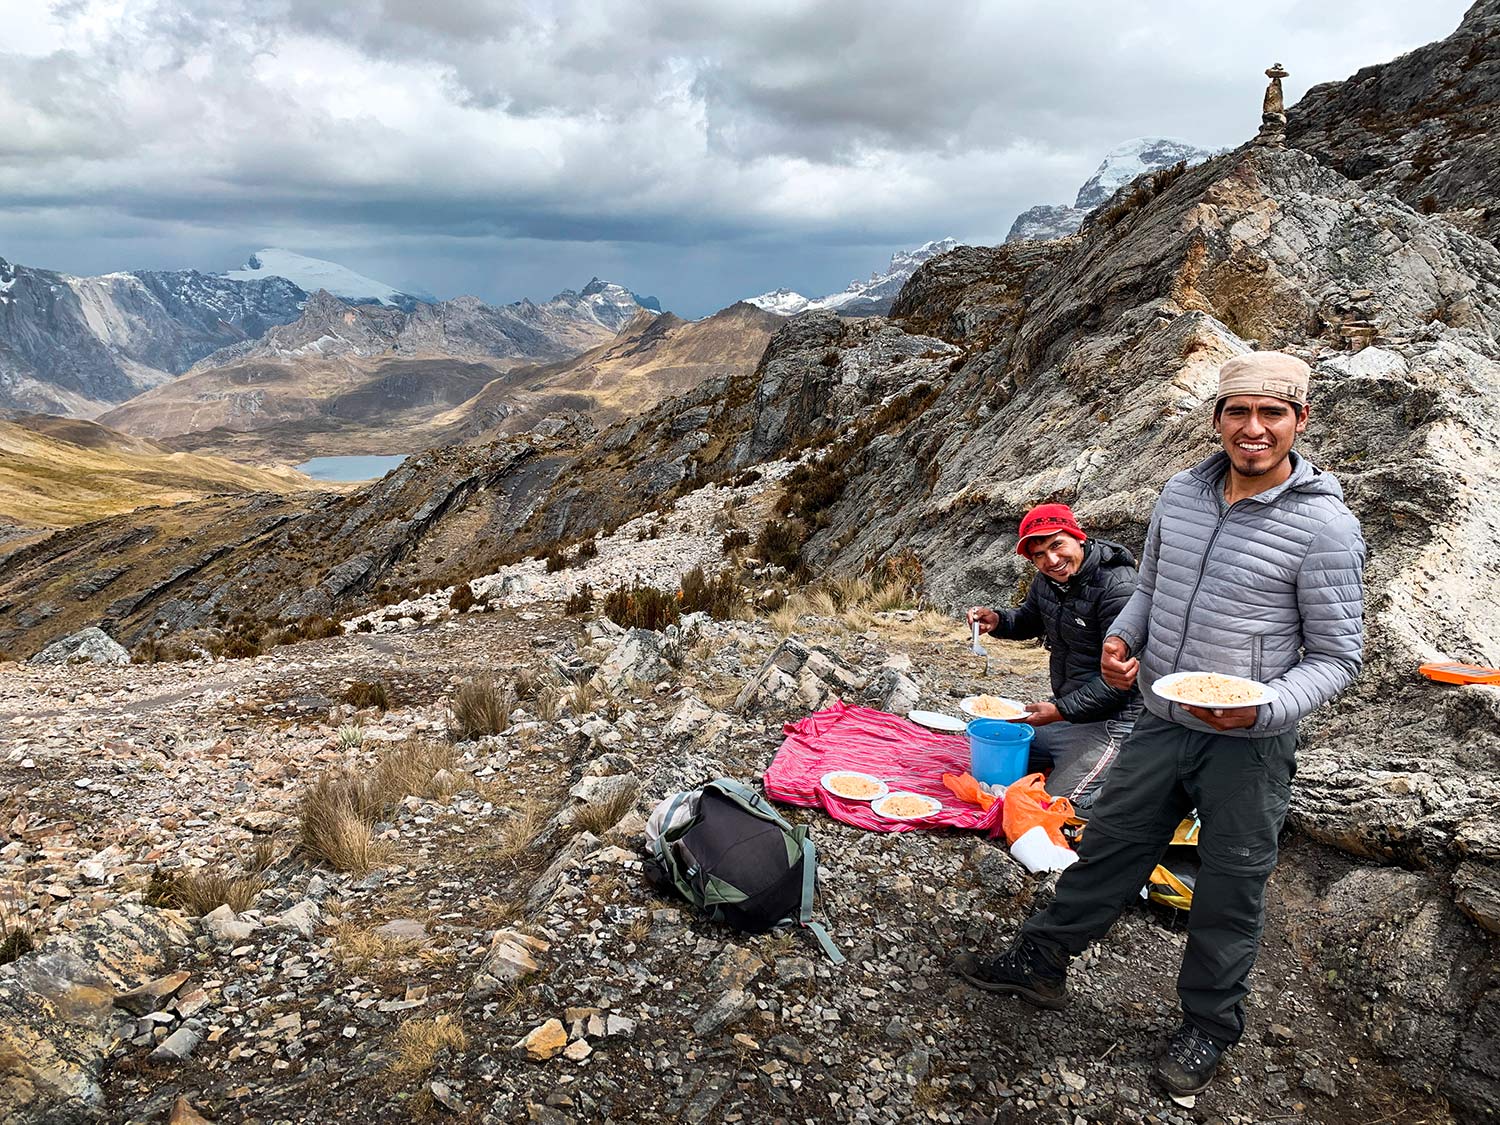 Guides de randonnée, Cordillera Huayhuash, Pérou / Trekking guides, Cordillera Huayhuash, Peru